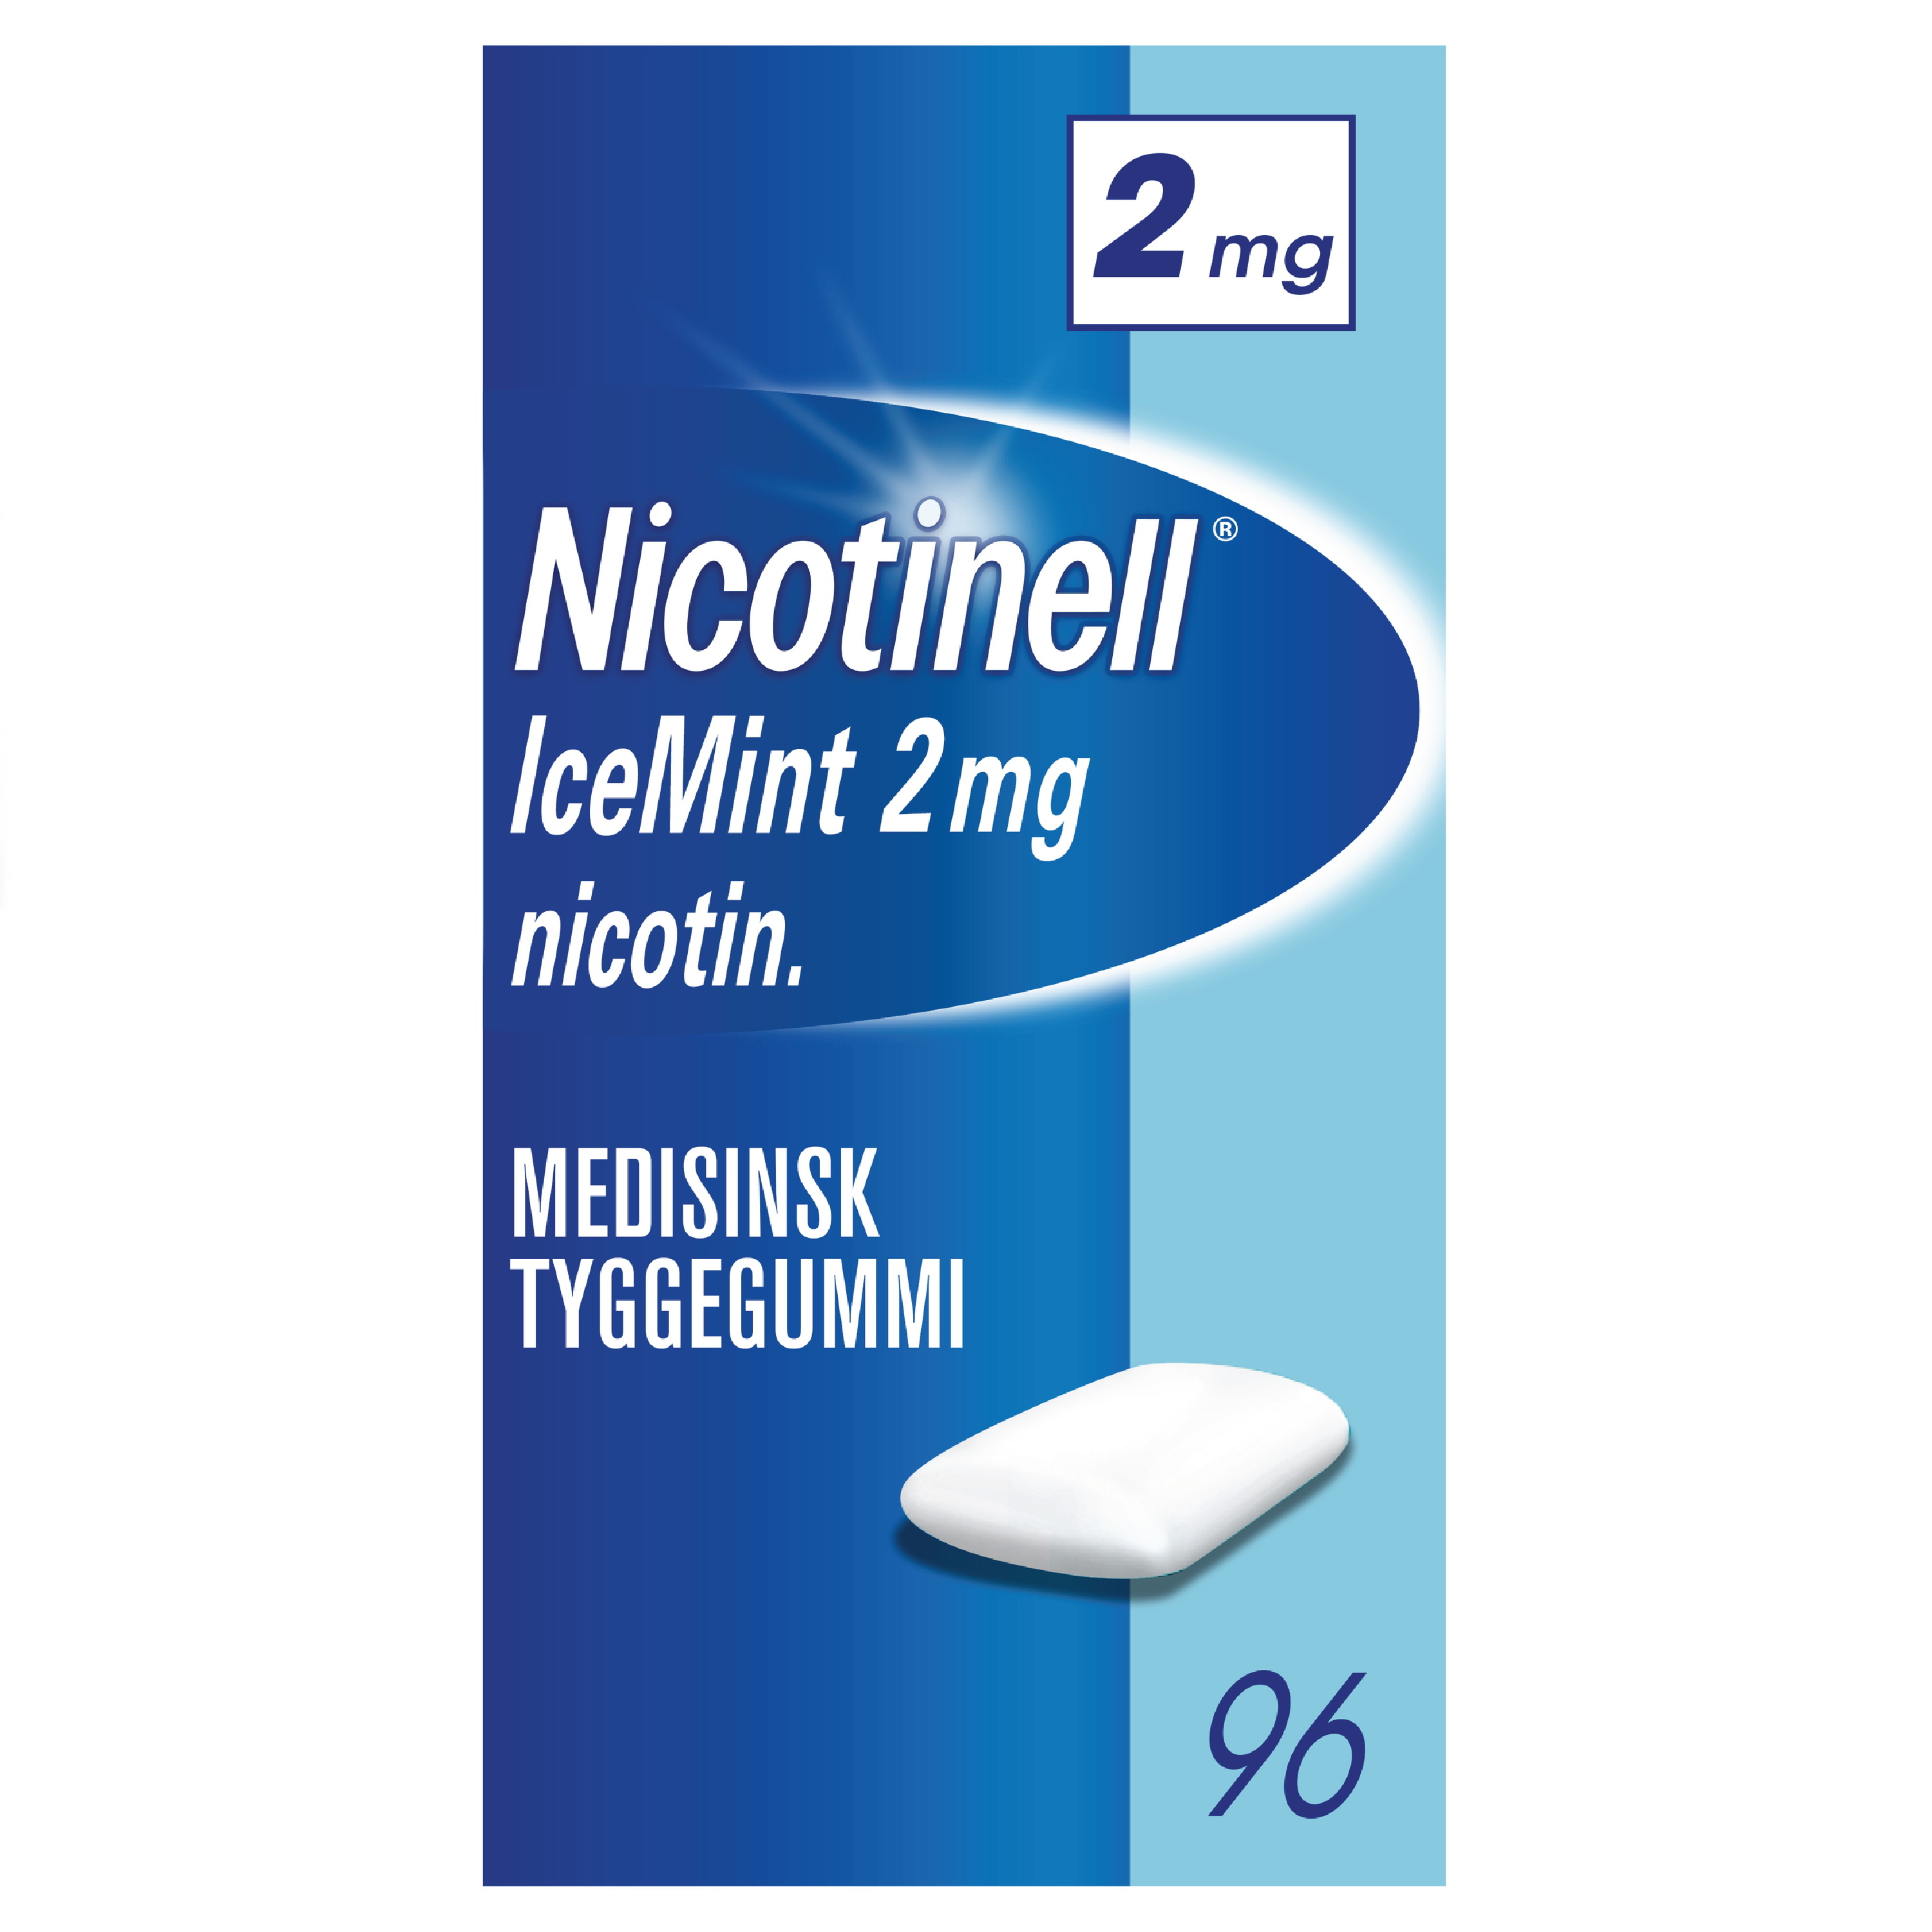 Nicotinell Tyggegummi 2mg icemint, Slutte å røyke,  96 stk.